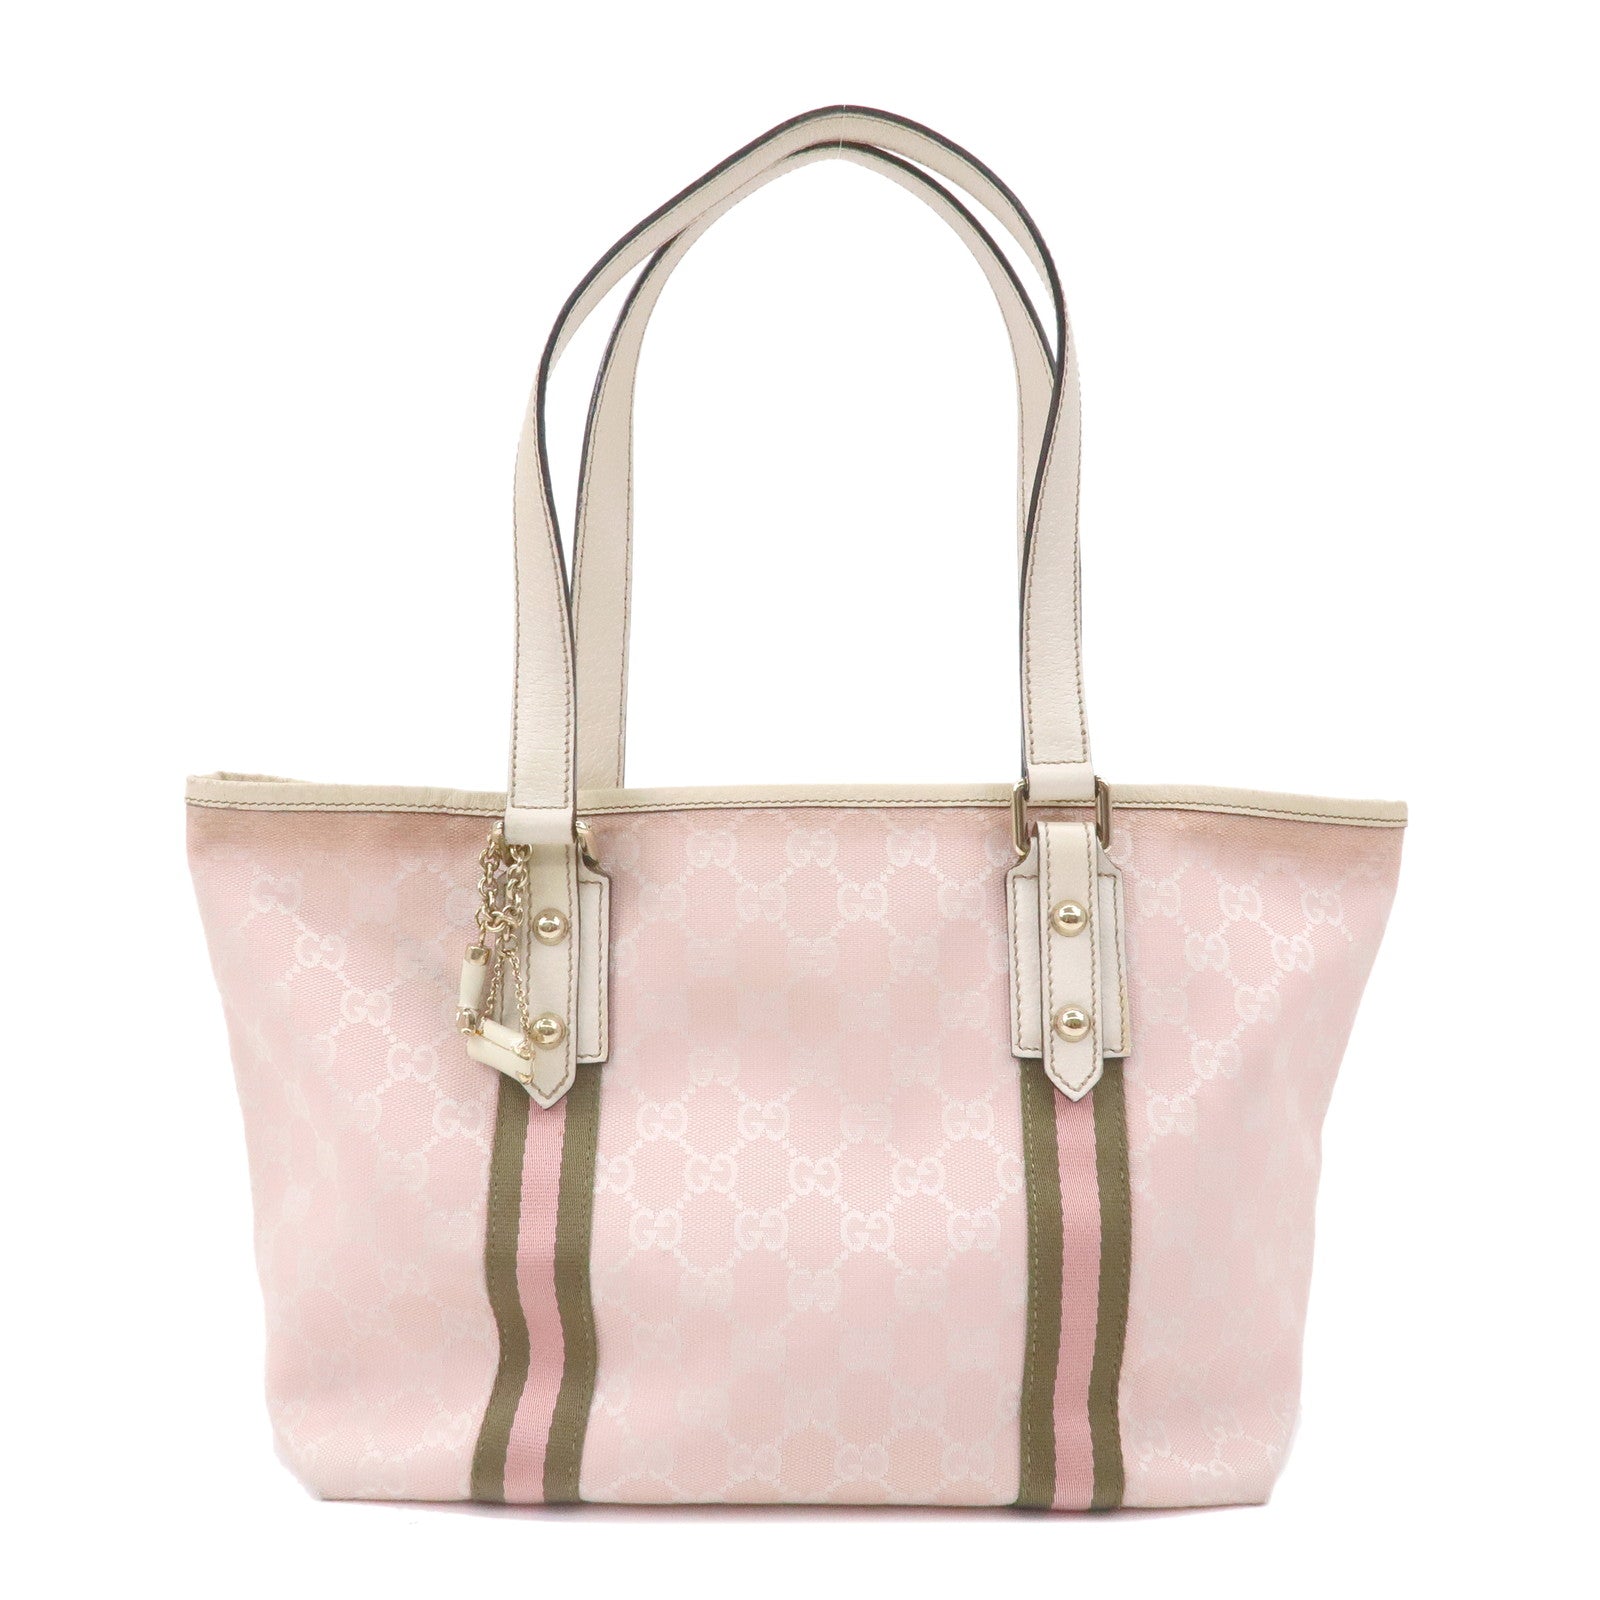 Gucci Guccissima Small Leather Tote Bag, Light Pink